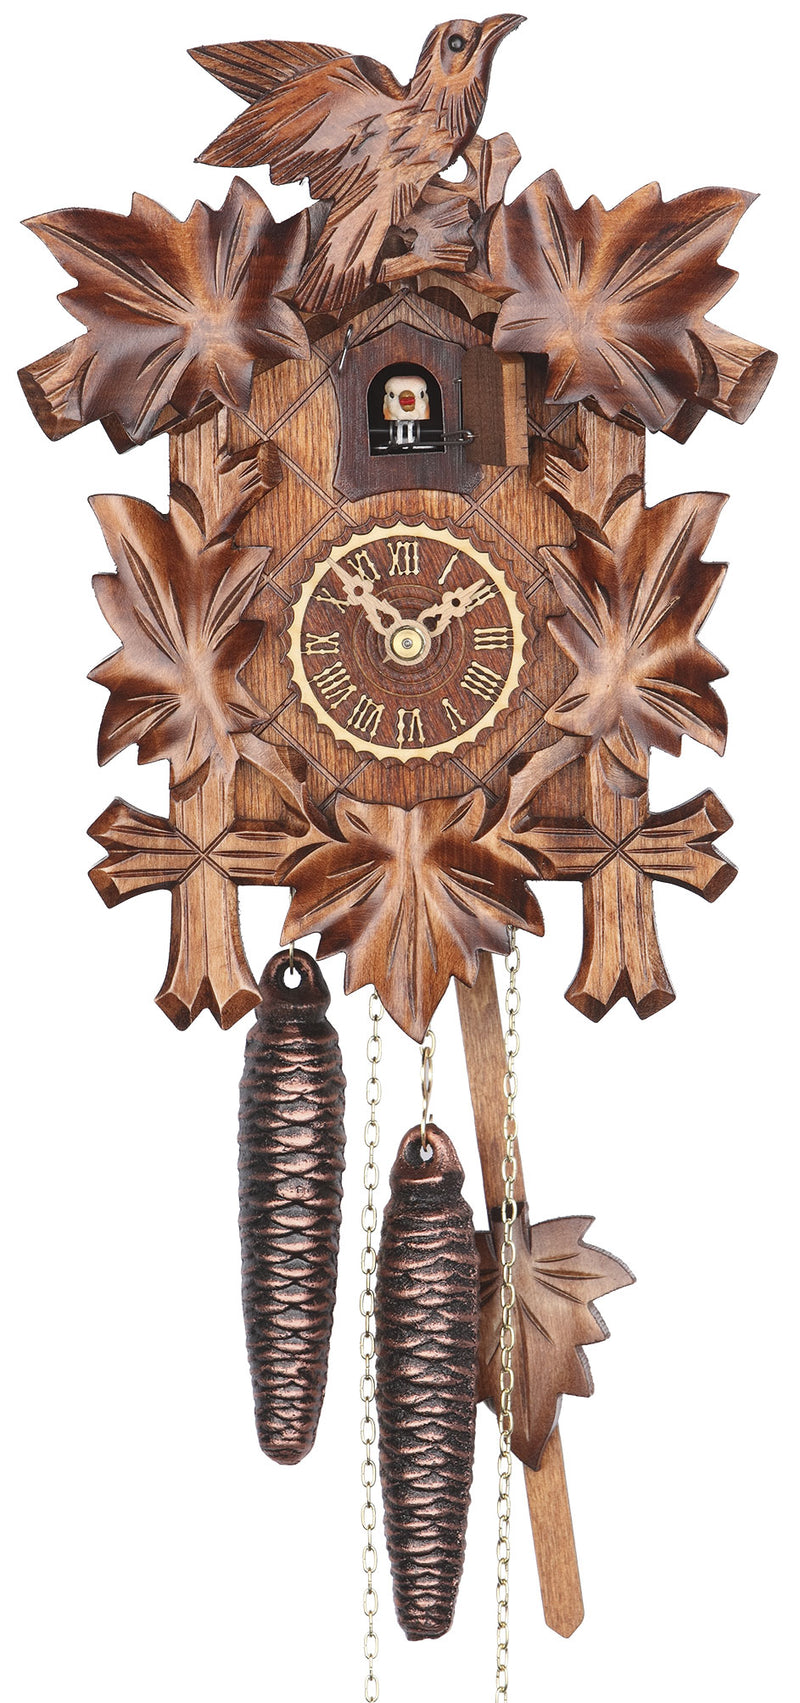 Howard Miller Table Clocks & Alarms – Frankenmuth Clock & German Gift Co.